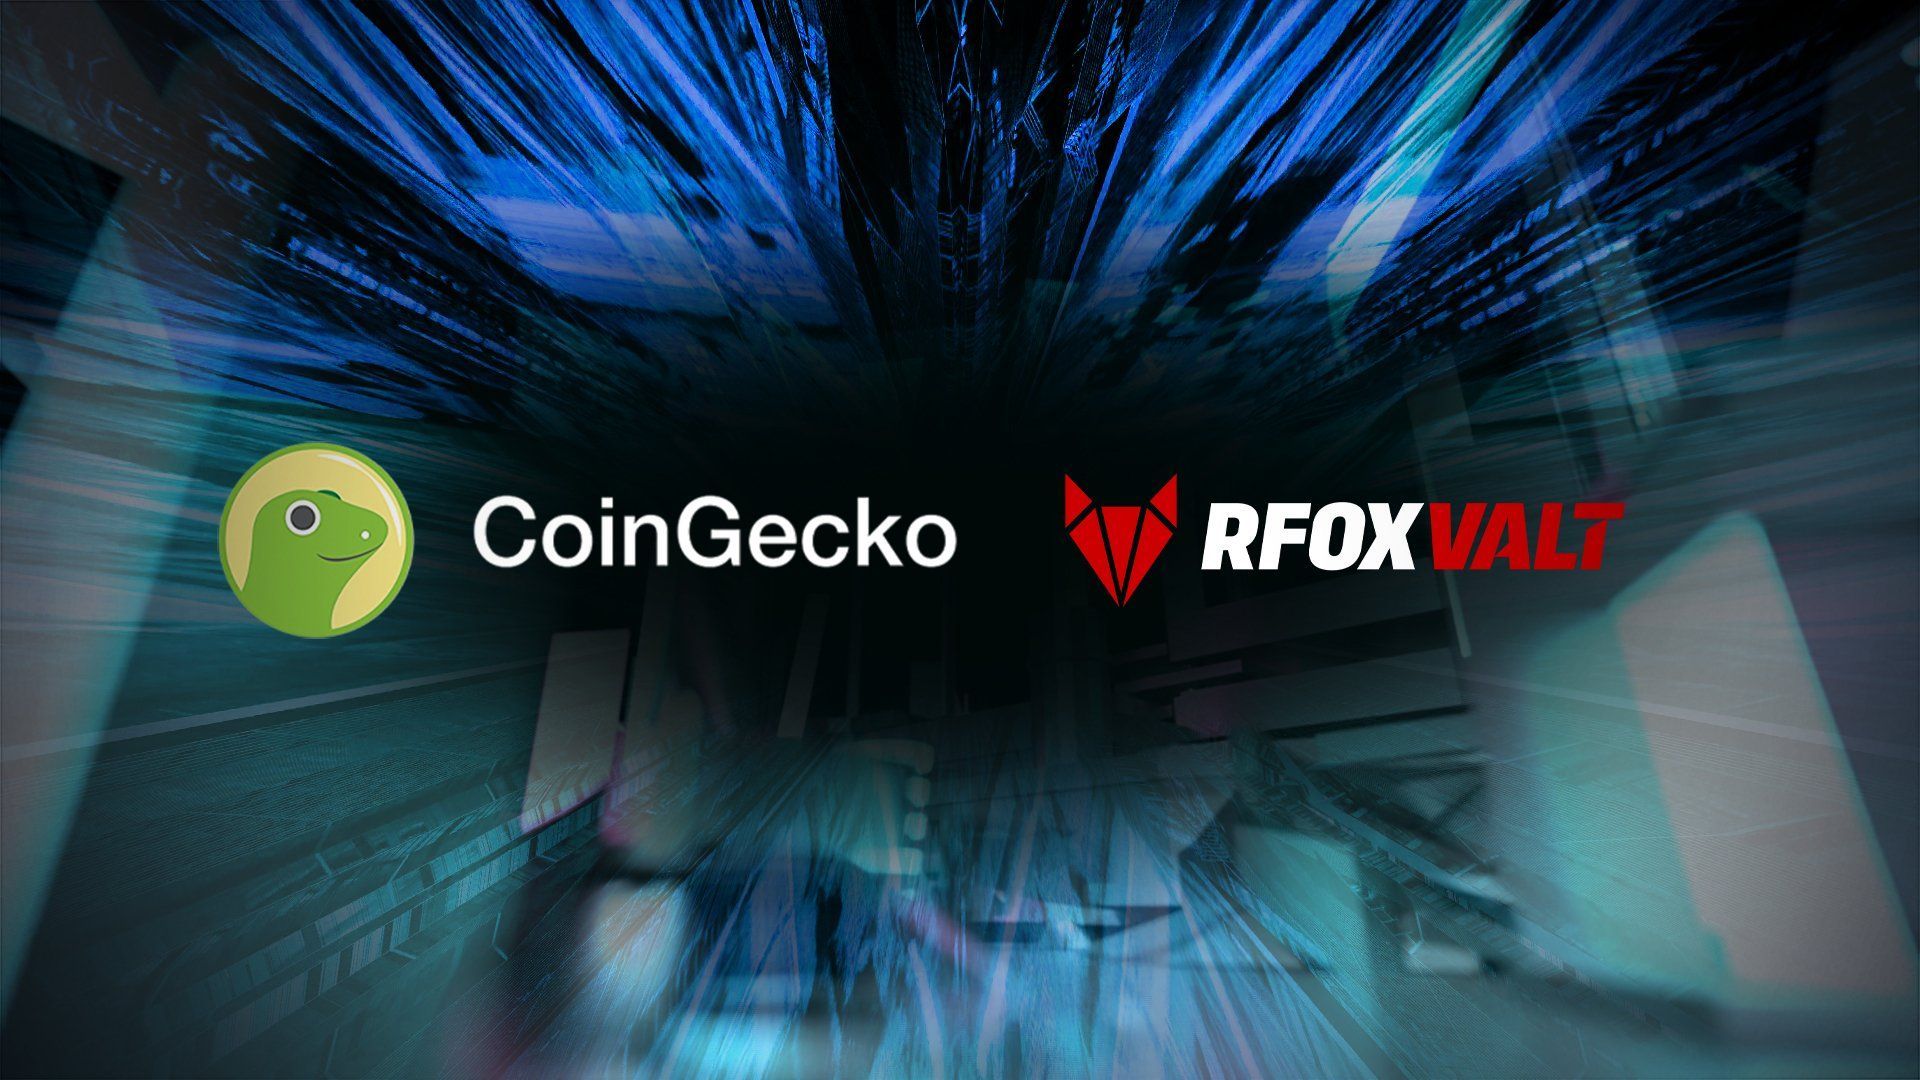 RFOX - The CoinGecko and RFOX VALT logos warping in metaverse world